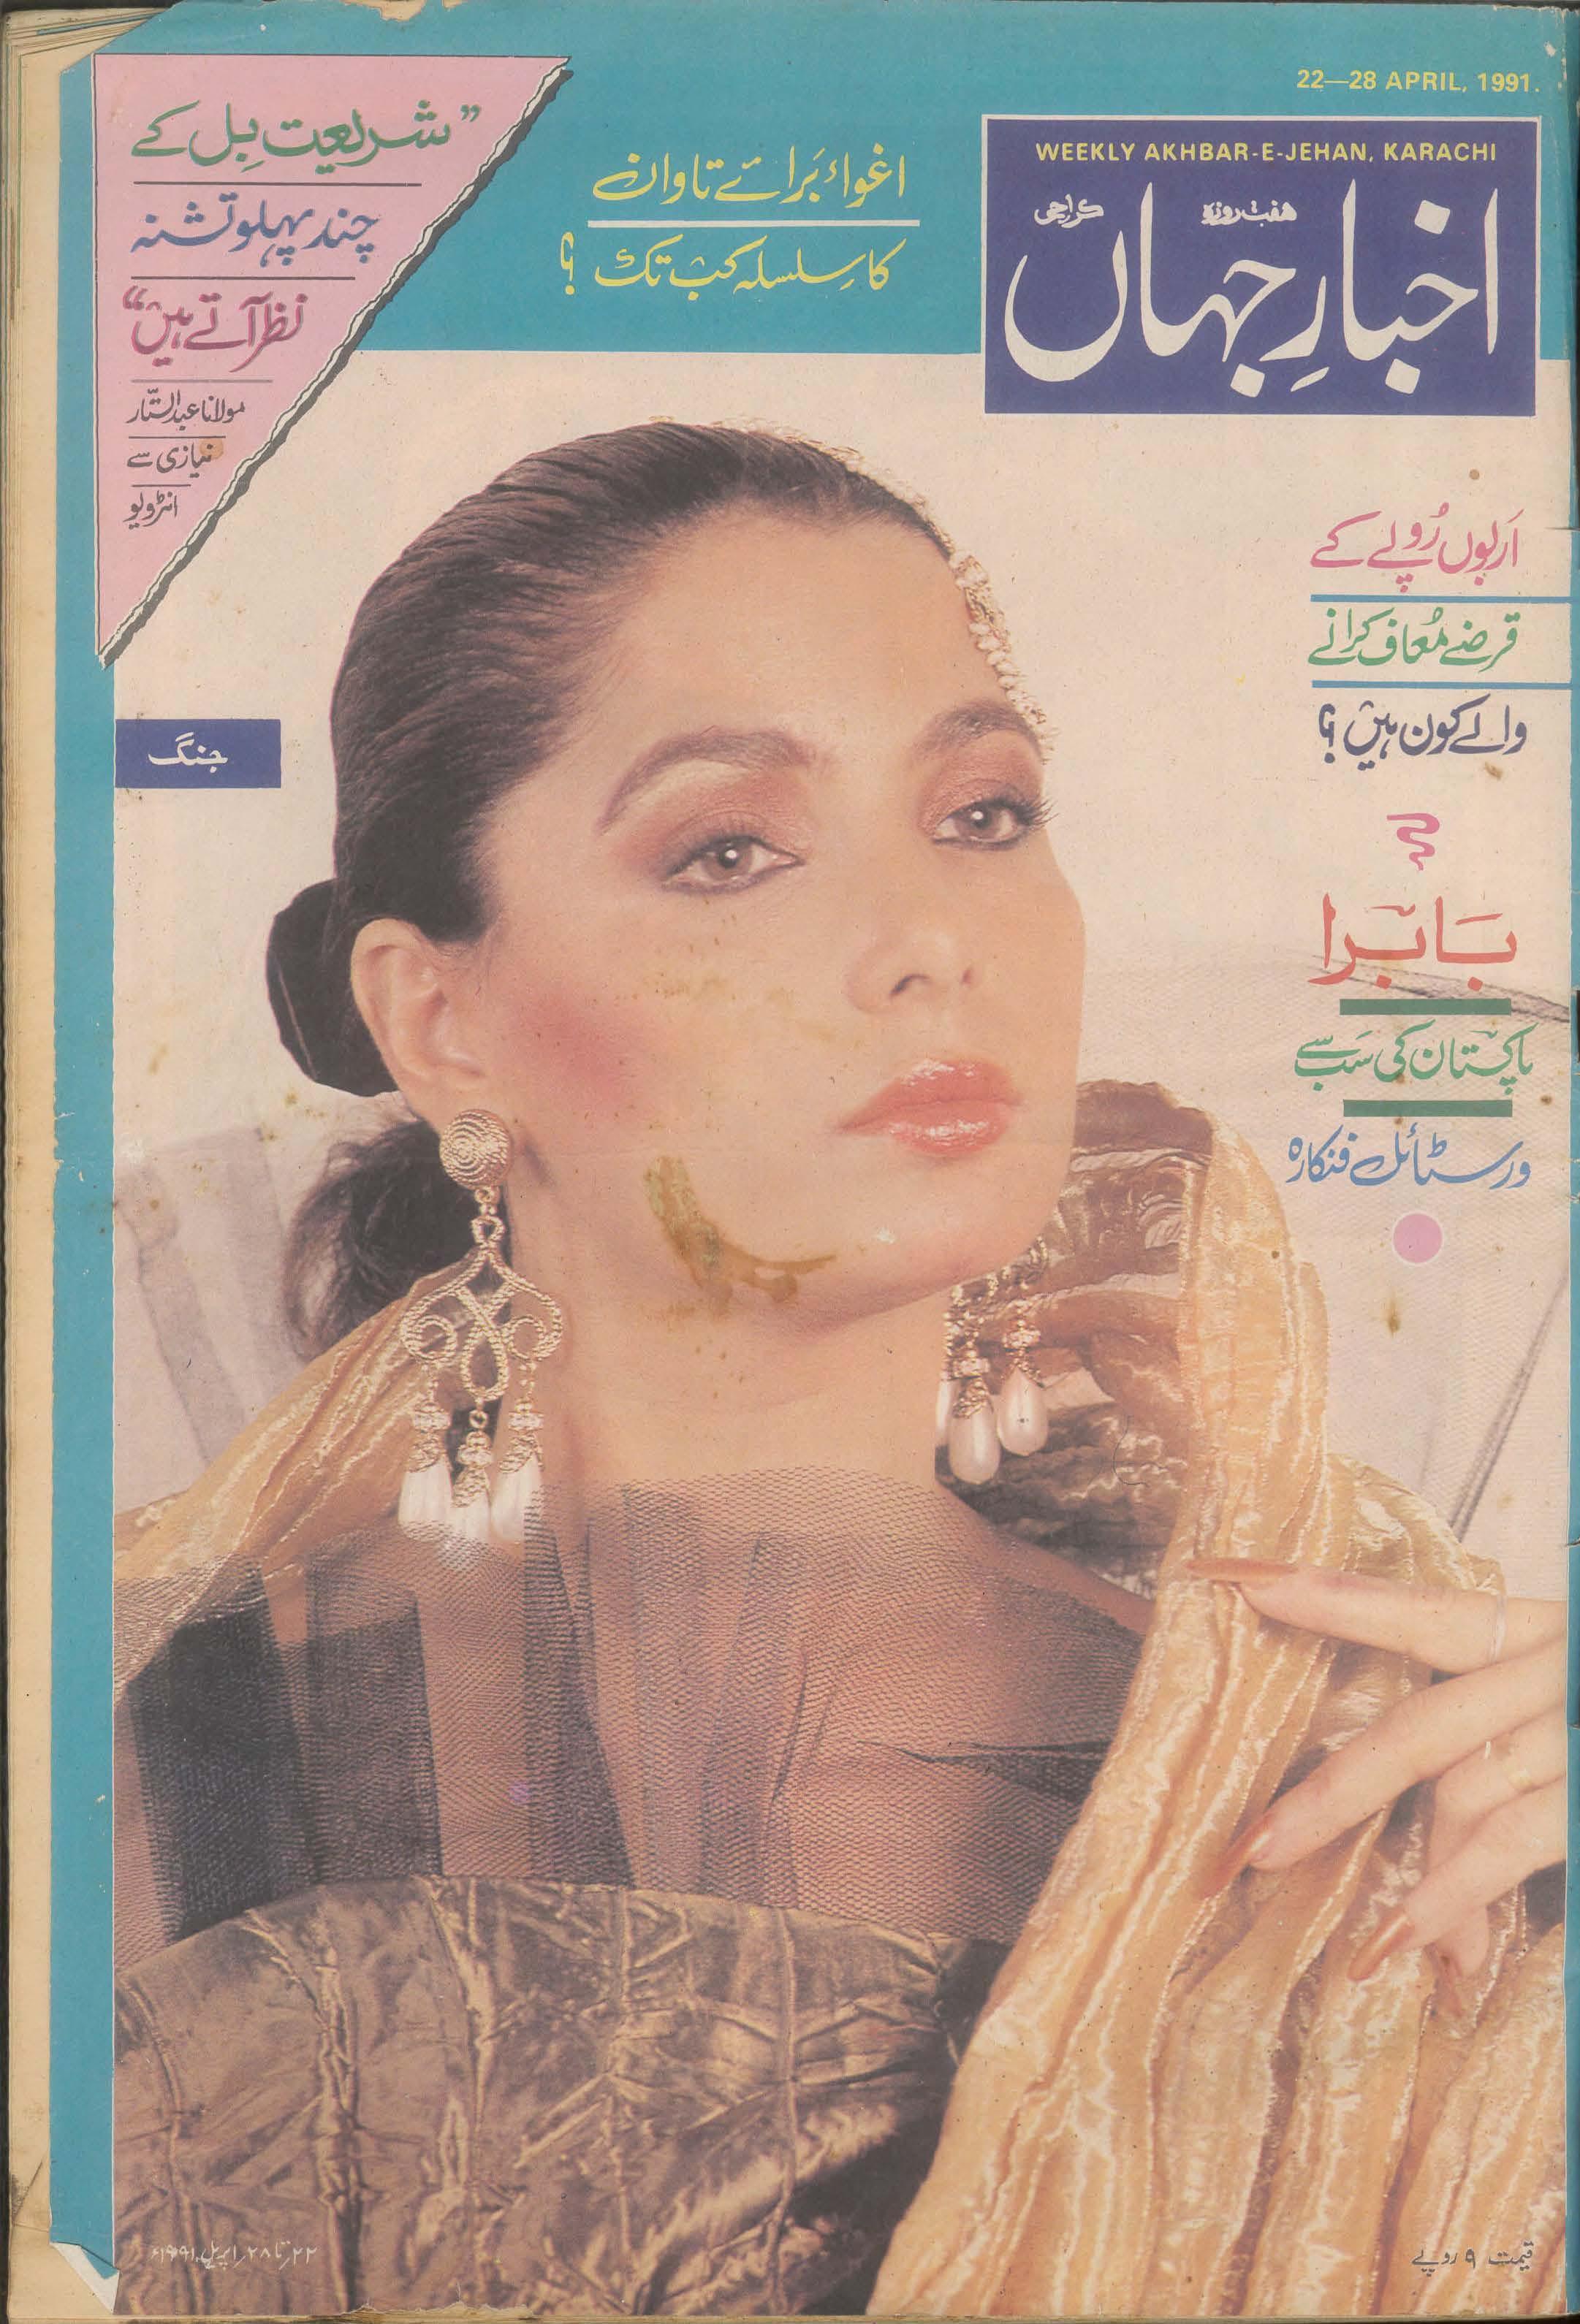 Akhbar-e-Jahan (April 22-28, 1991)